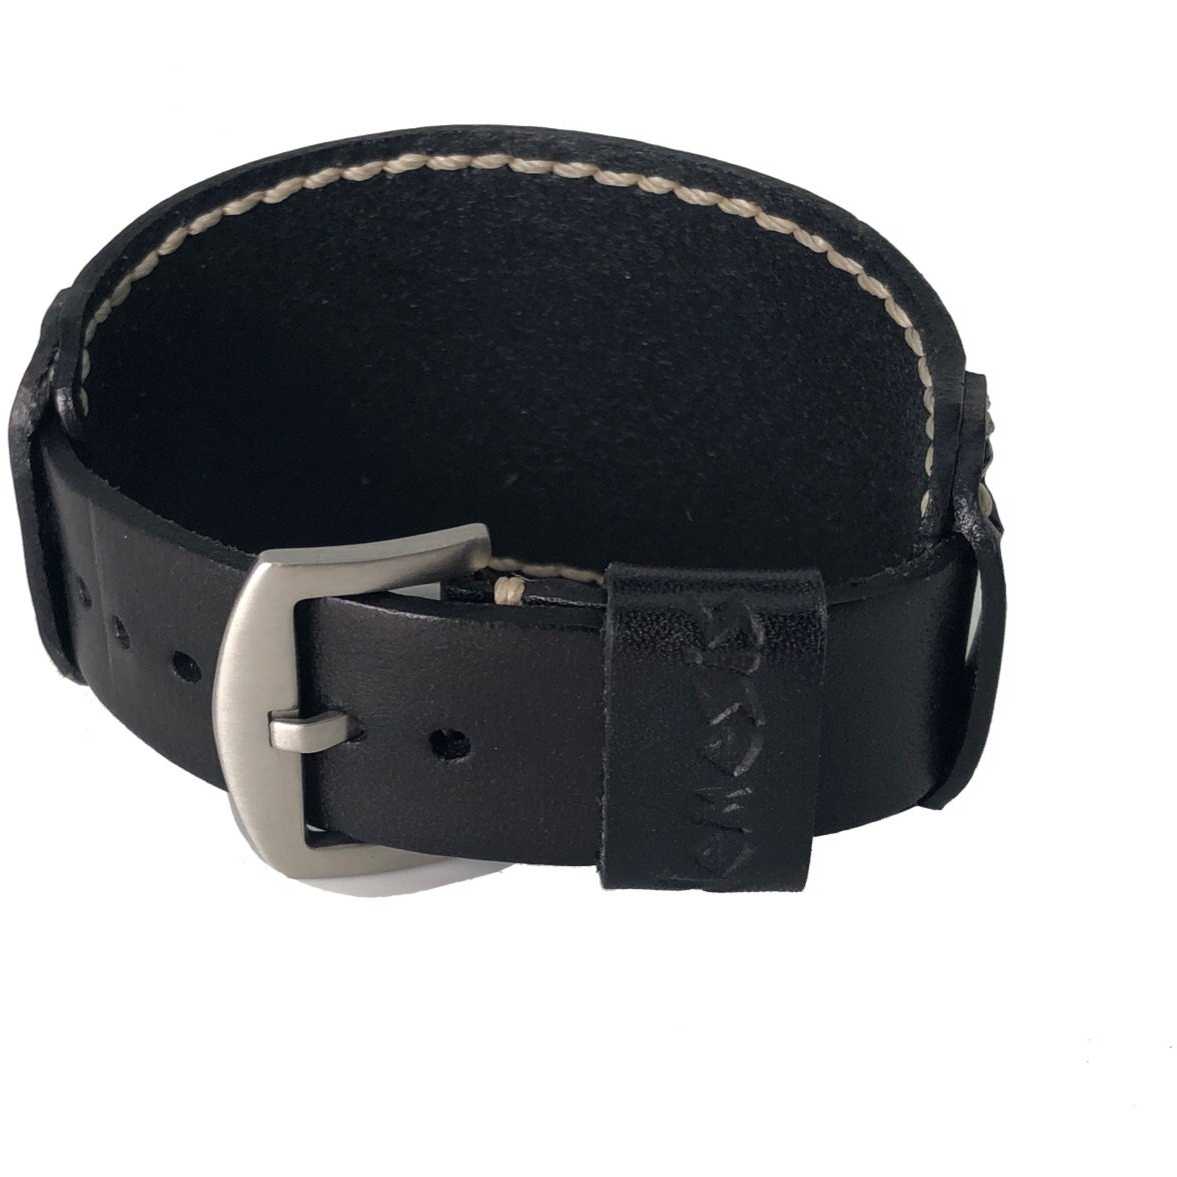 White Stitched Black Watch Leather Cuff